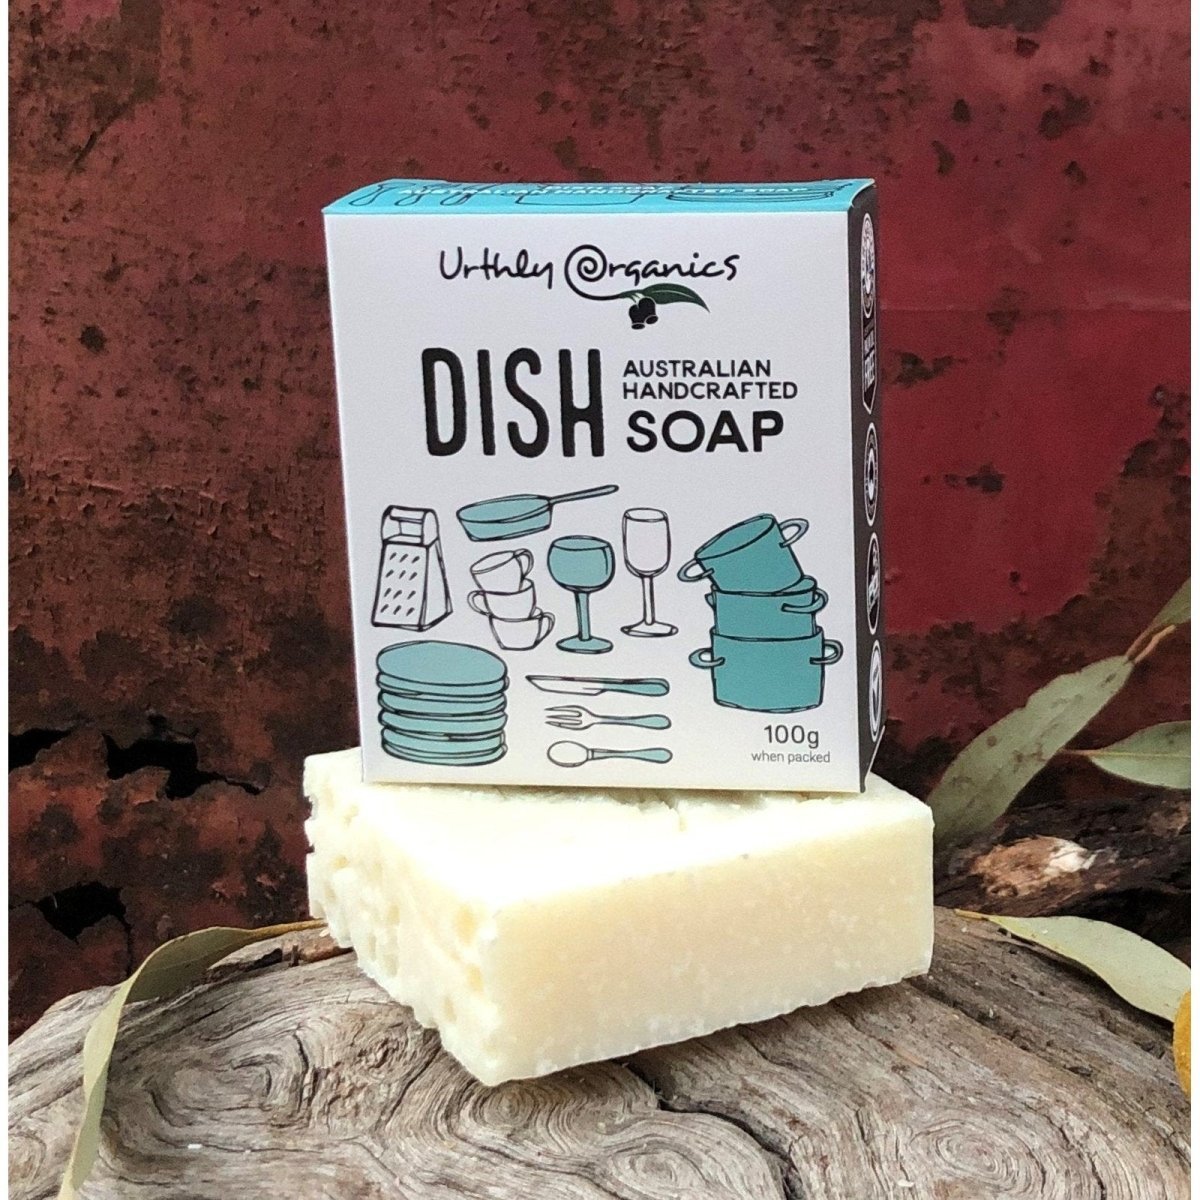 Urthly Organics Australian Handcrafted Dish Soap, 100g